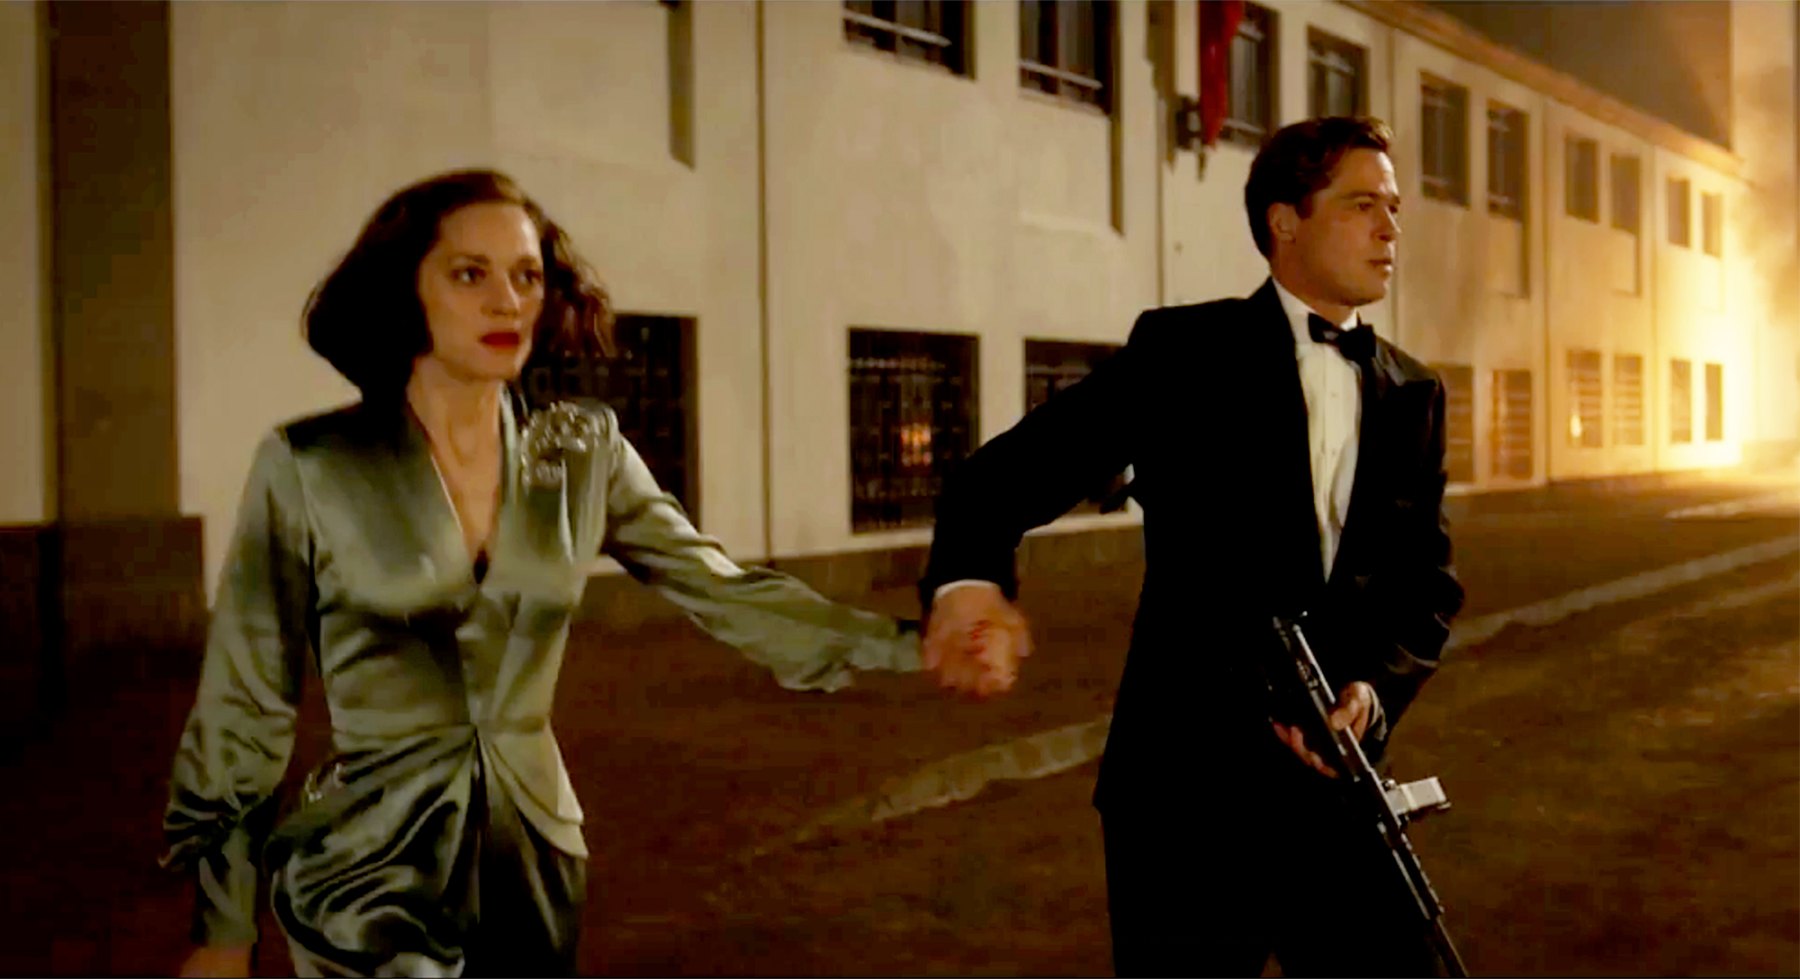 Brad Pitt Marion Cotillard S New Allied Trailer Debuts Watch